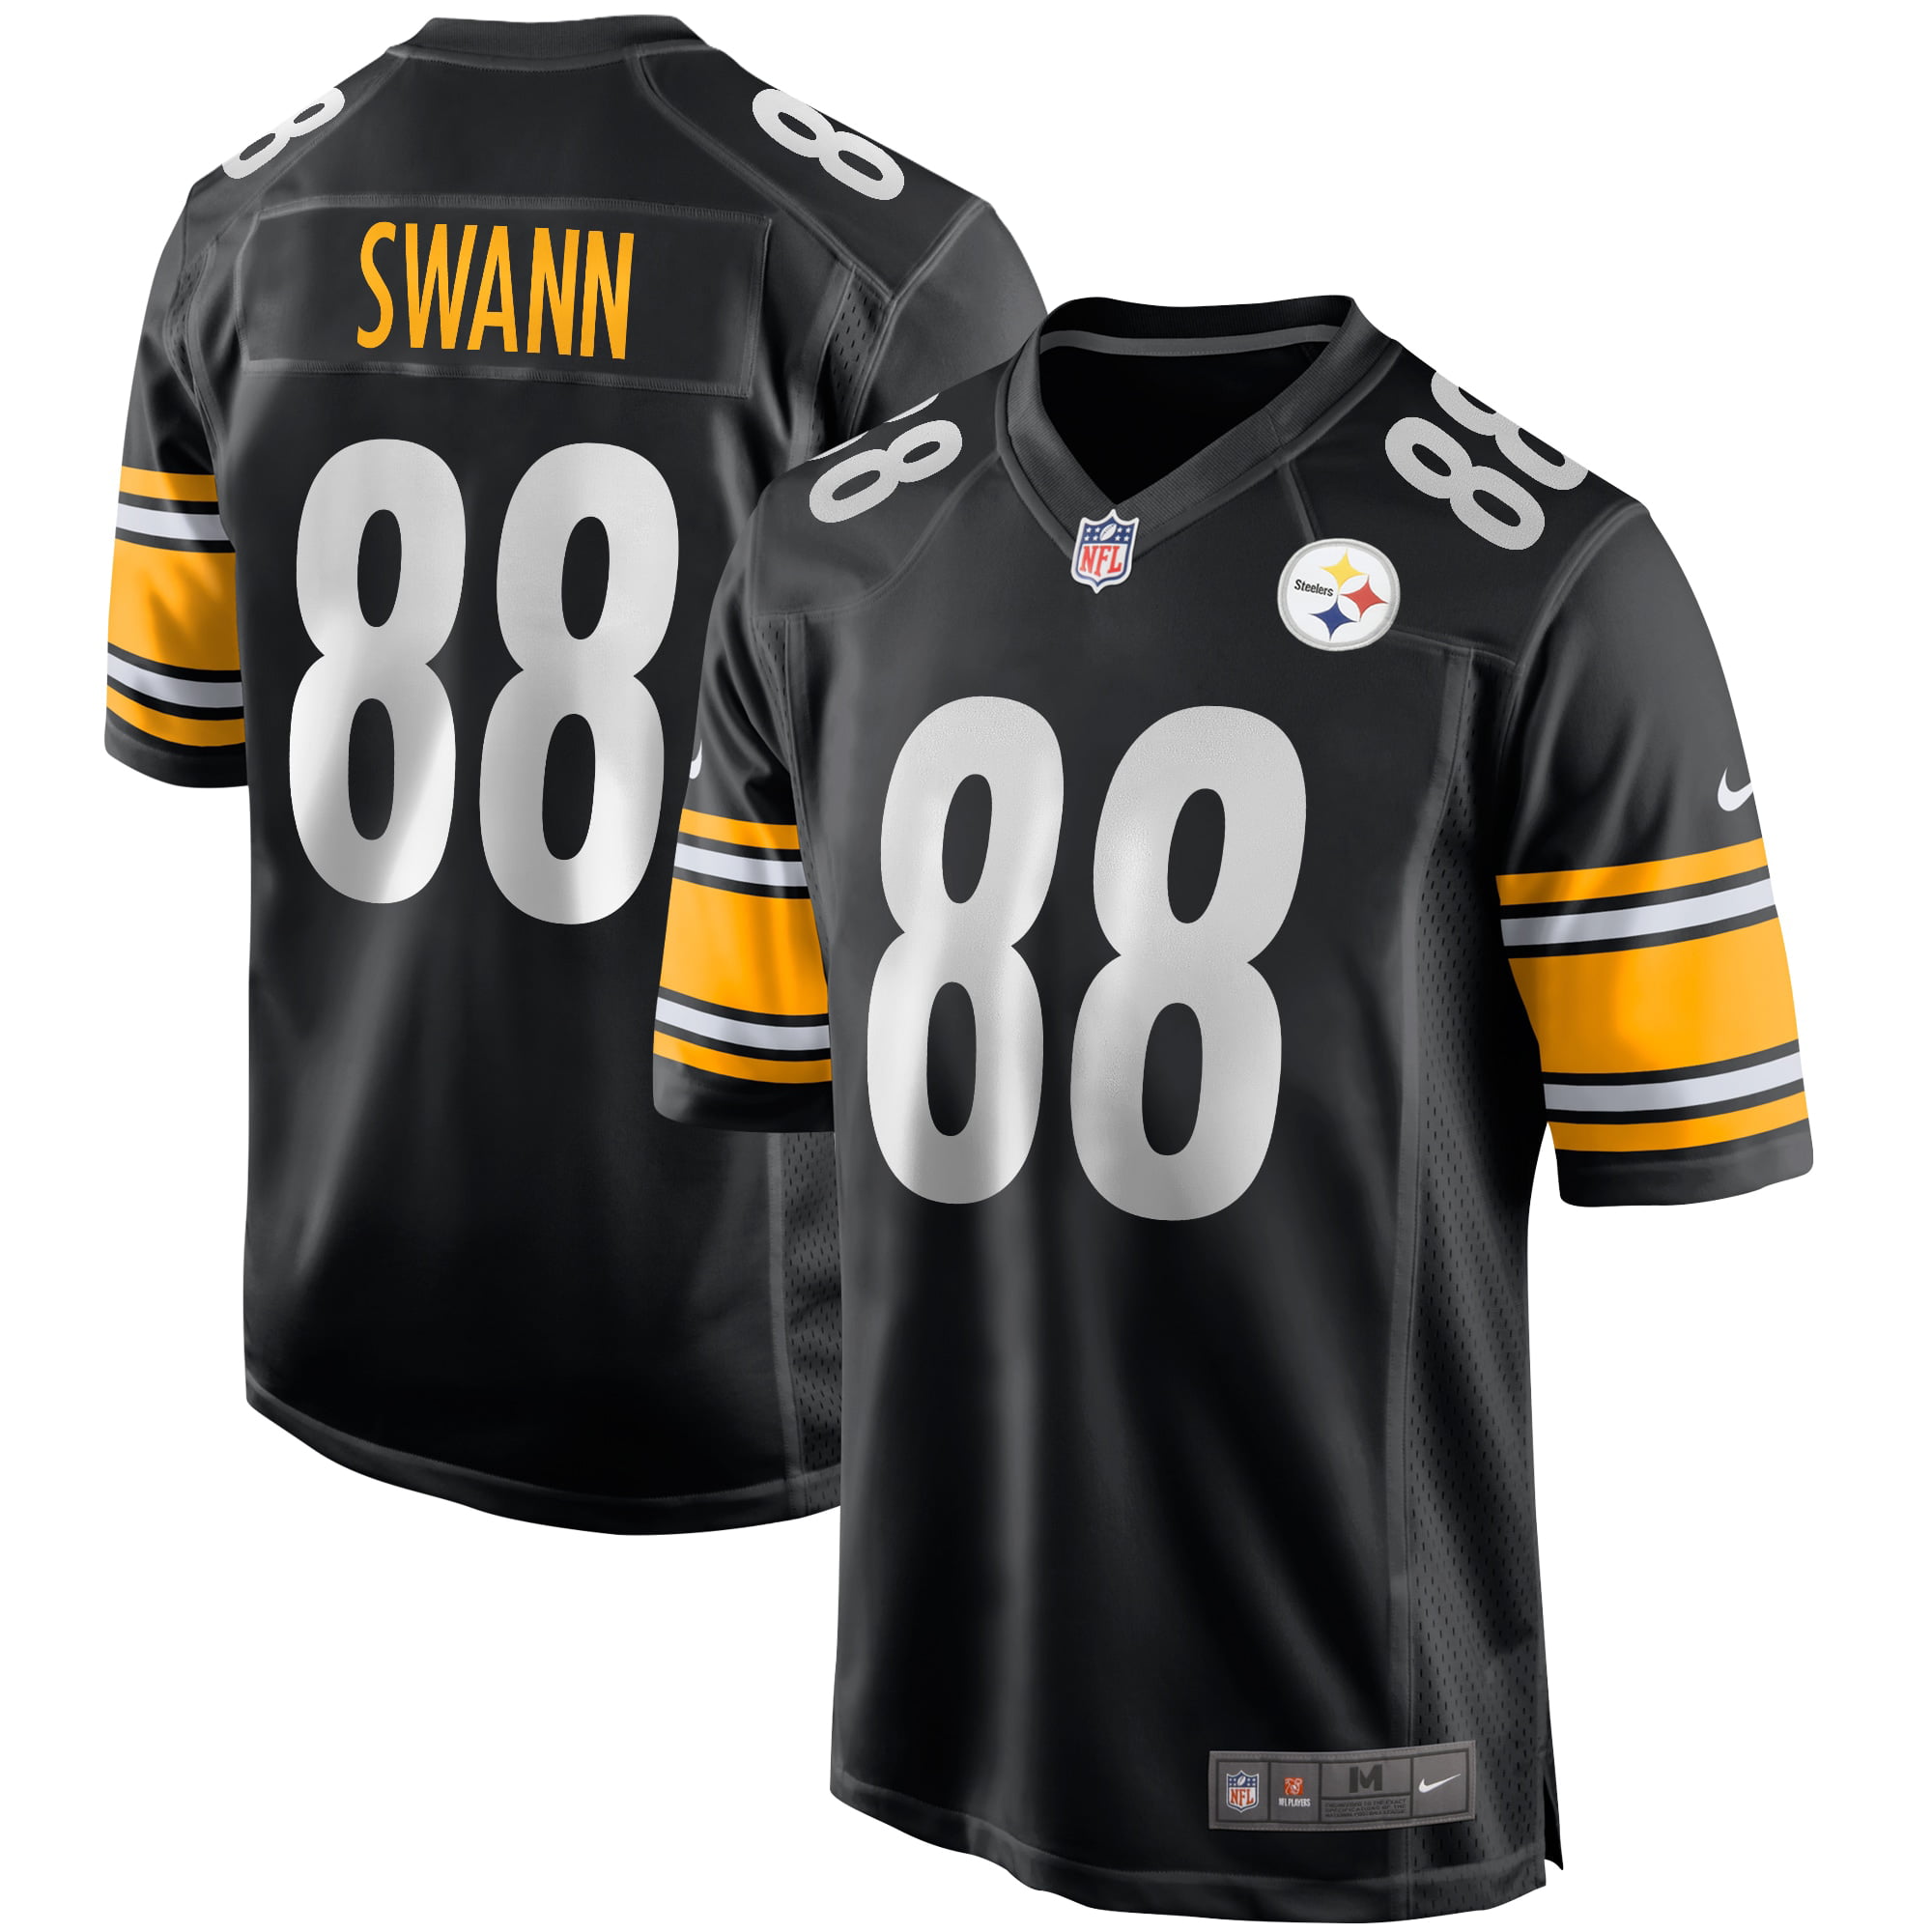 Lynn Swann Pittsburgh Steelers Nike Game Retired Player Jersey - Black - Walmart.com